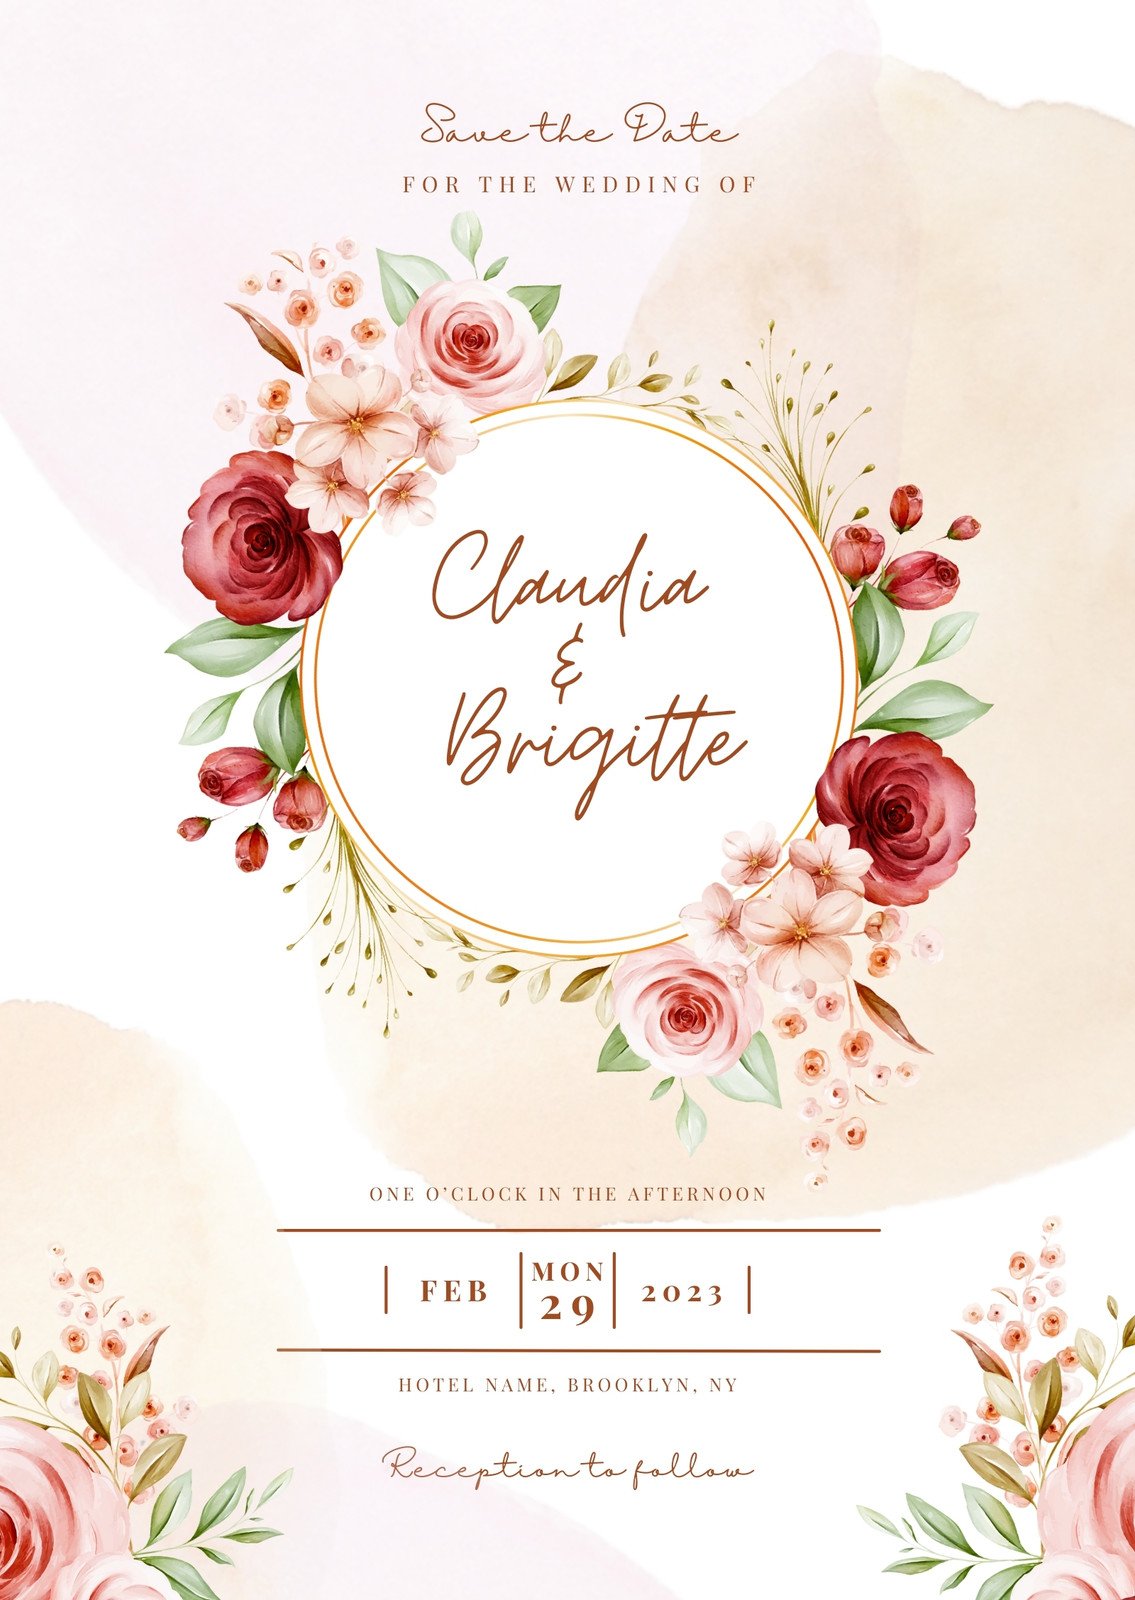 Printable Wedding Invitation Template Wedding invitation Download Edit w Canva Printable Editable Wedding Invitation Template